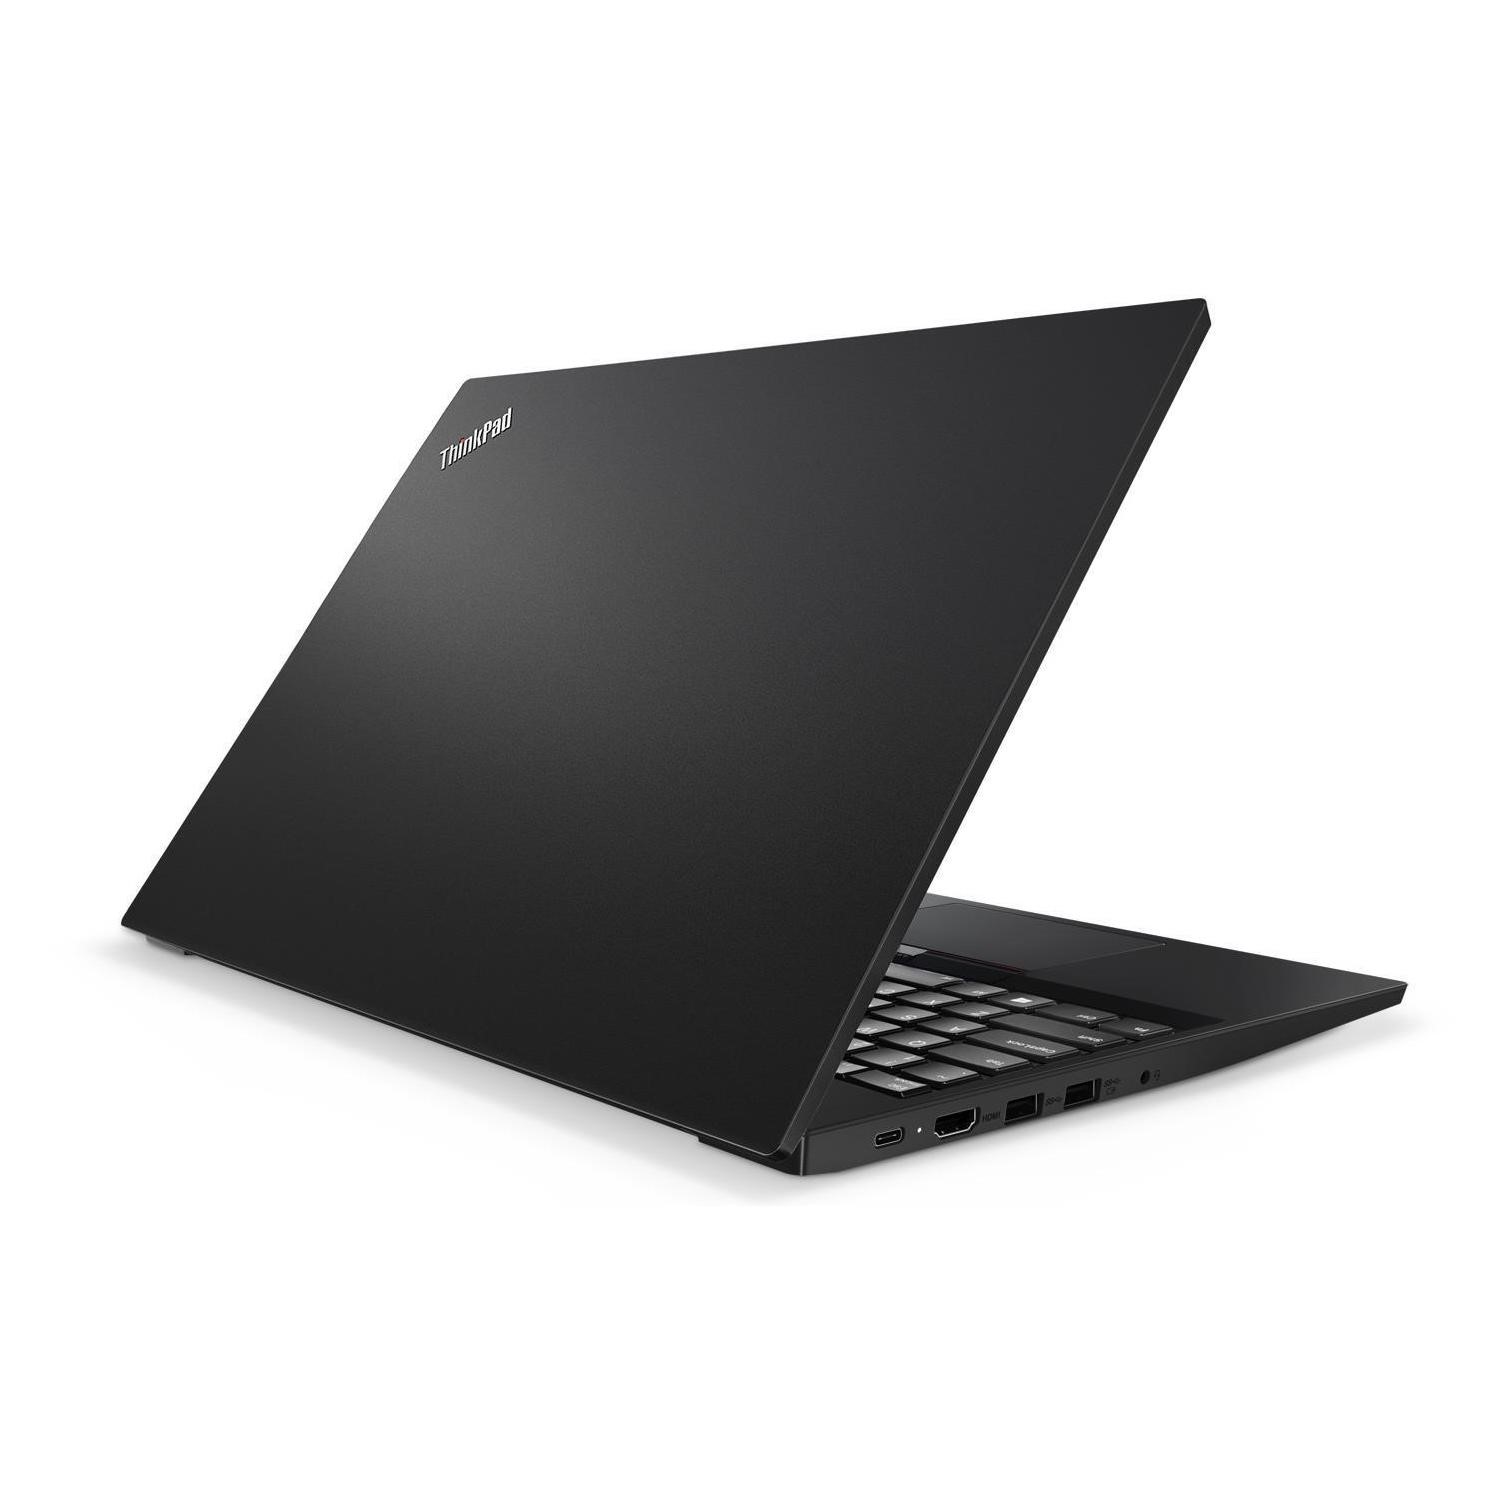 Lenovo ThinkPad E580 20KS Core i5-8250U 8GB 256GB 15.6 Inch Full HD Windows  10 Pro Laptop